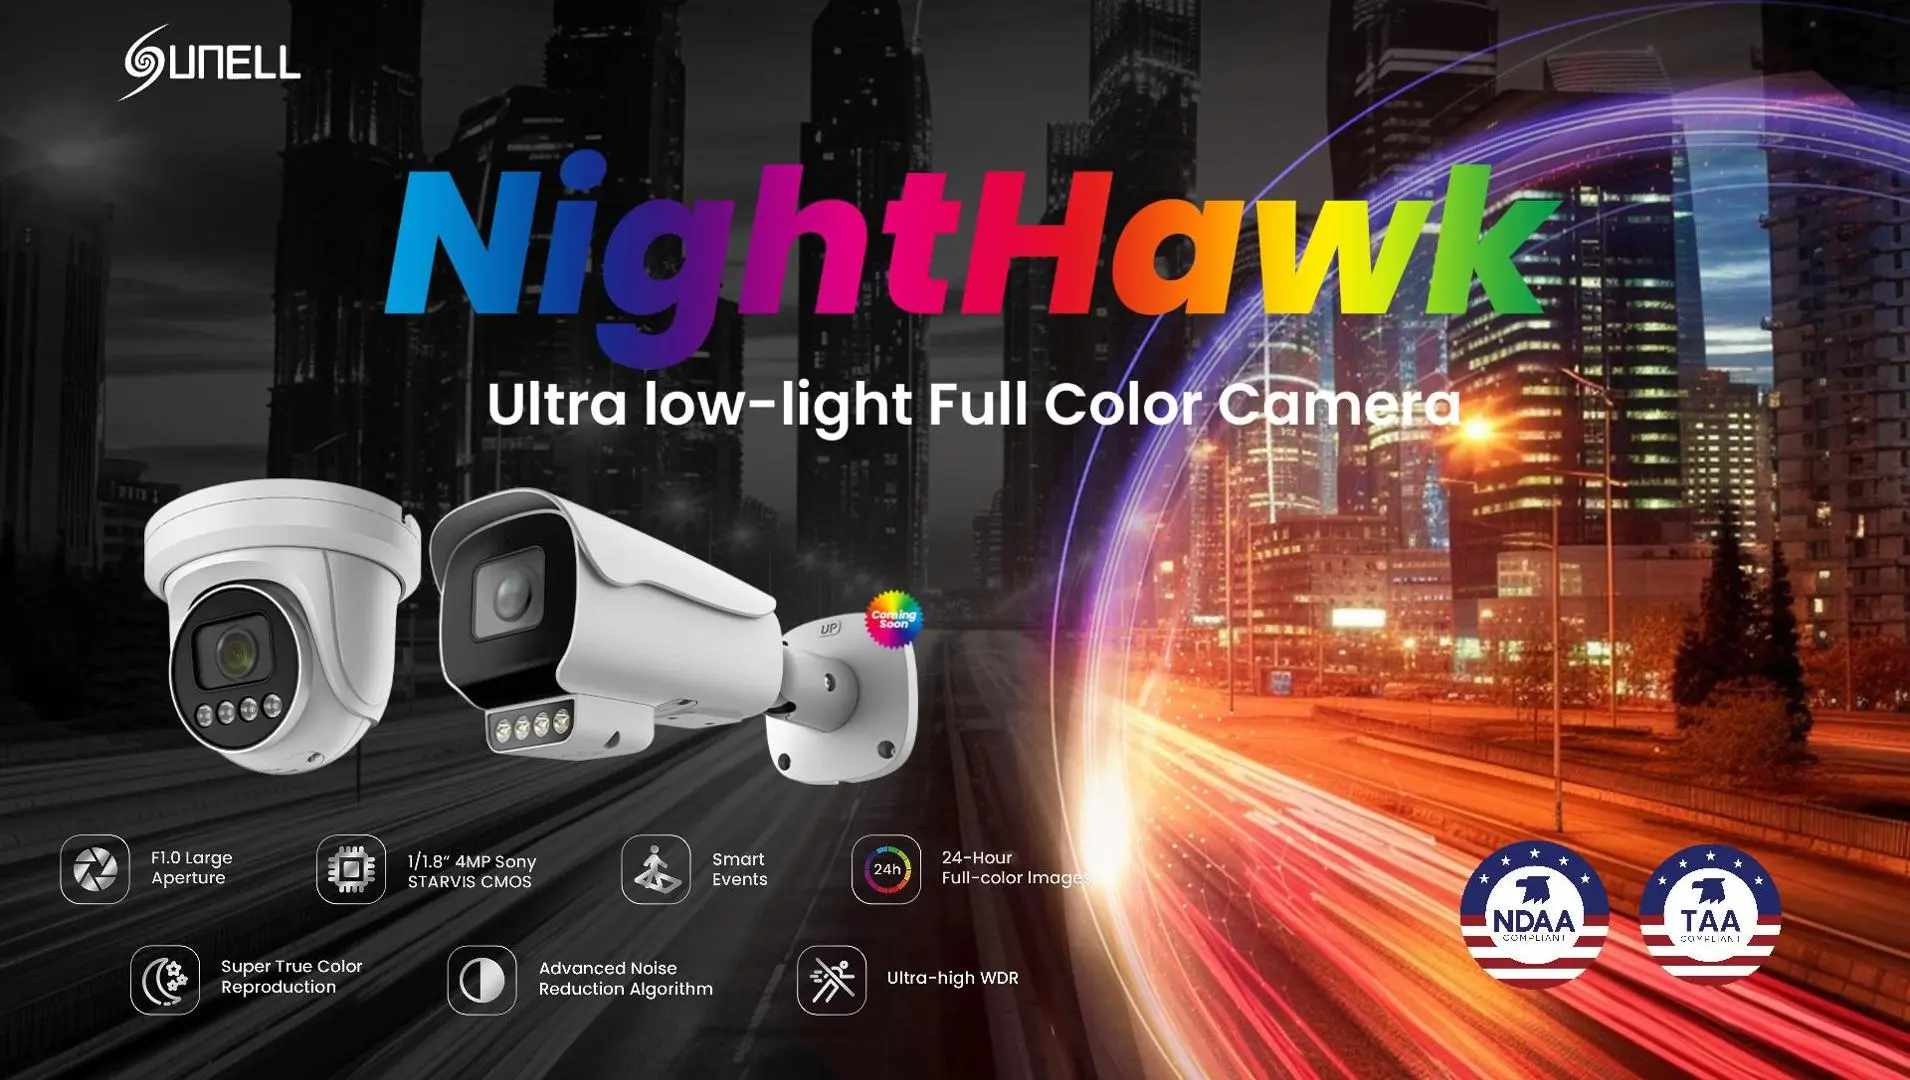 Sunell Nighthawk Ultra-low-light Câmera colorida inteligente